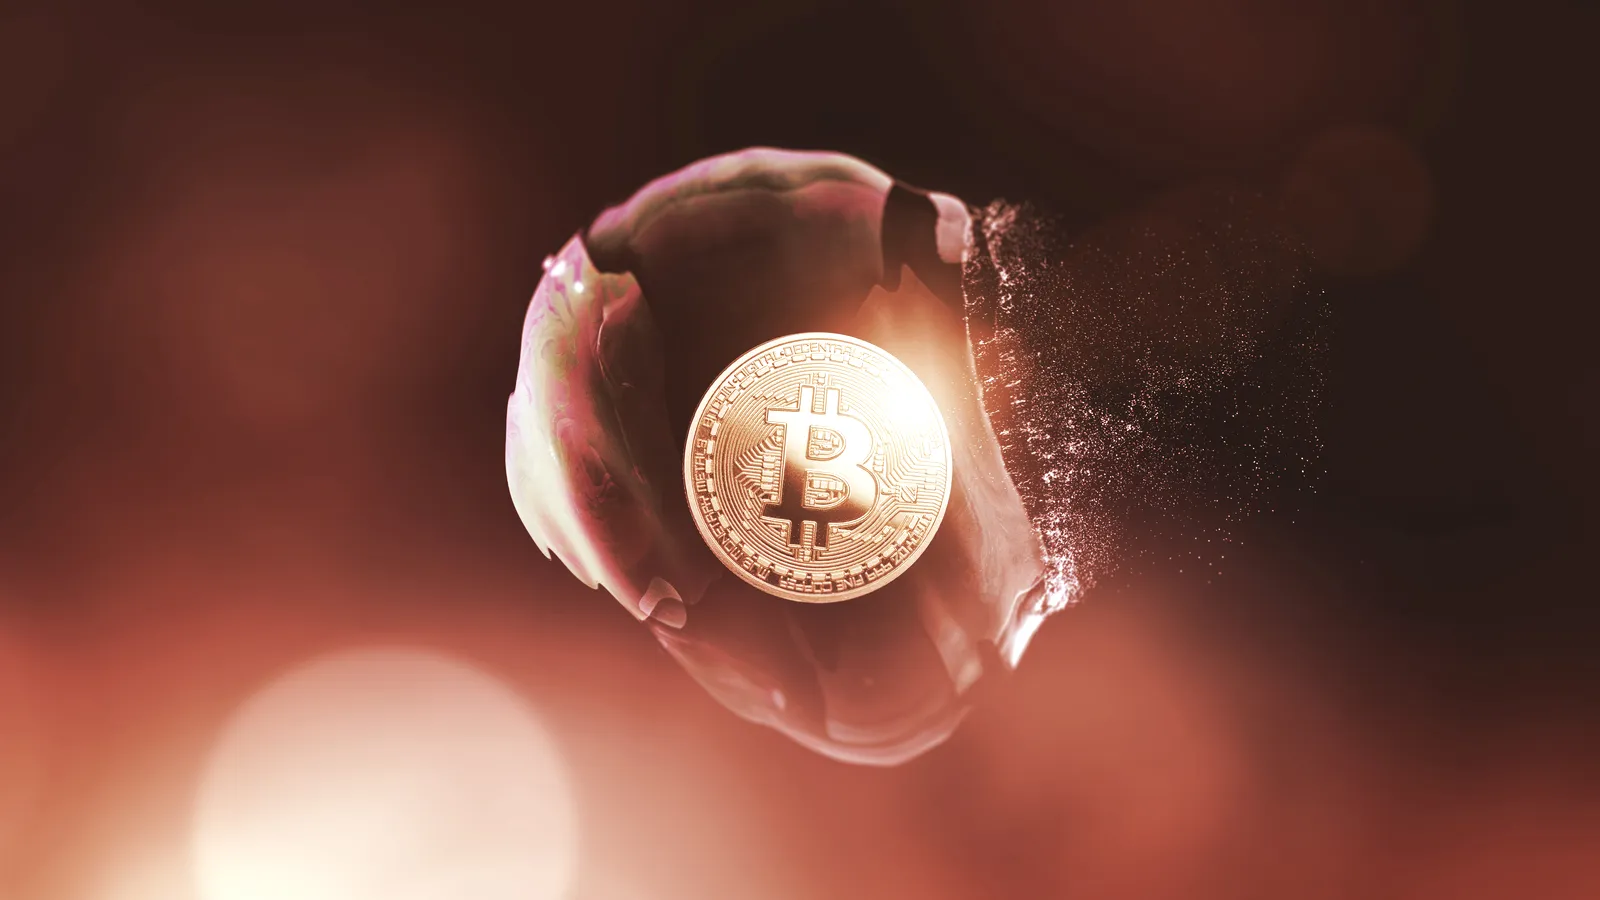 El estallido de una burbuja de Bitcoin. Imagen: Shutterstock